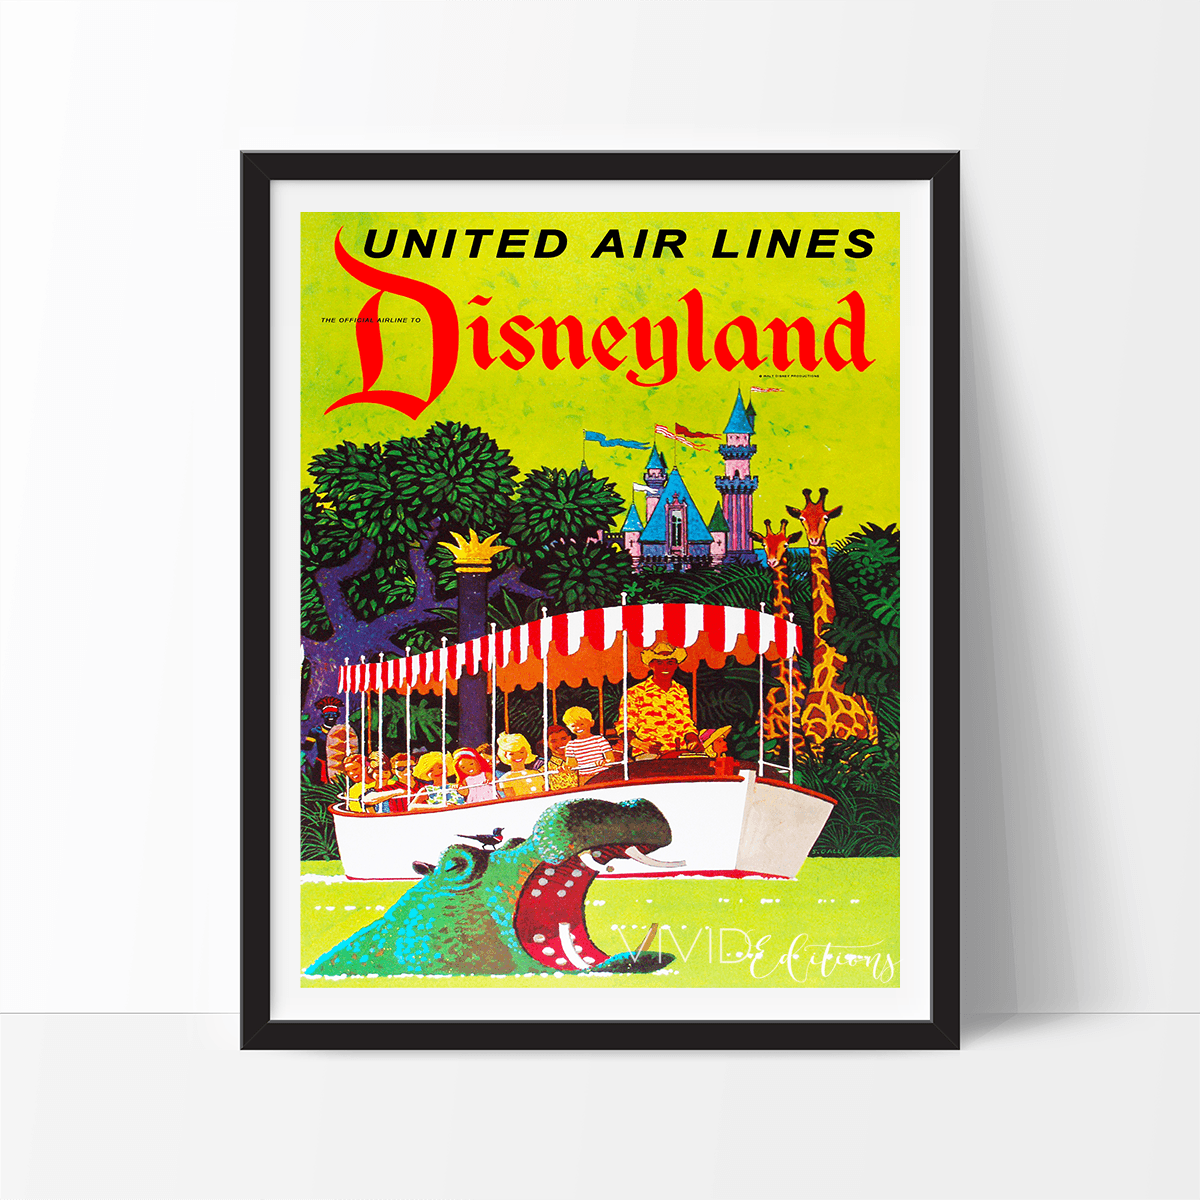 United Airlines, Disneyland Poster Print - VividEditions